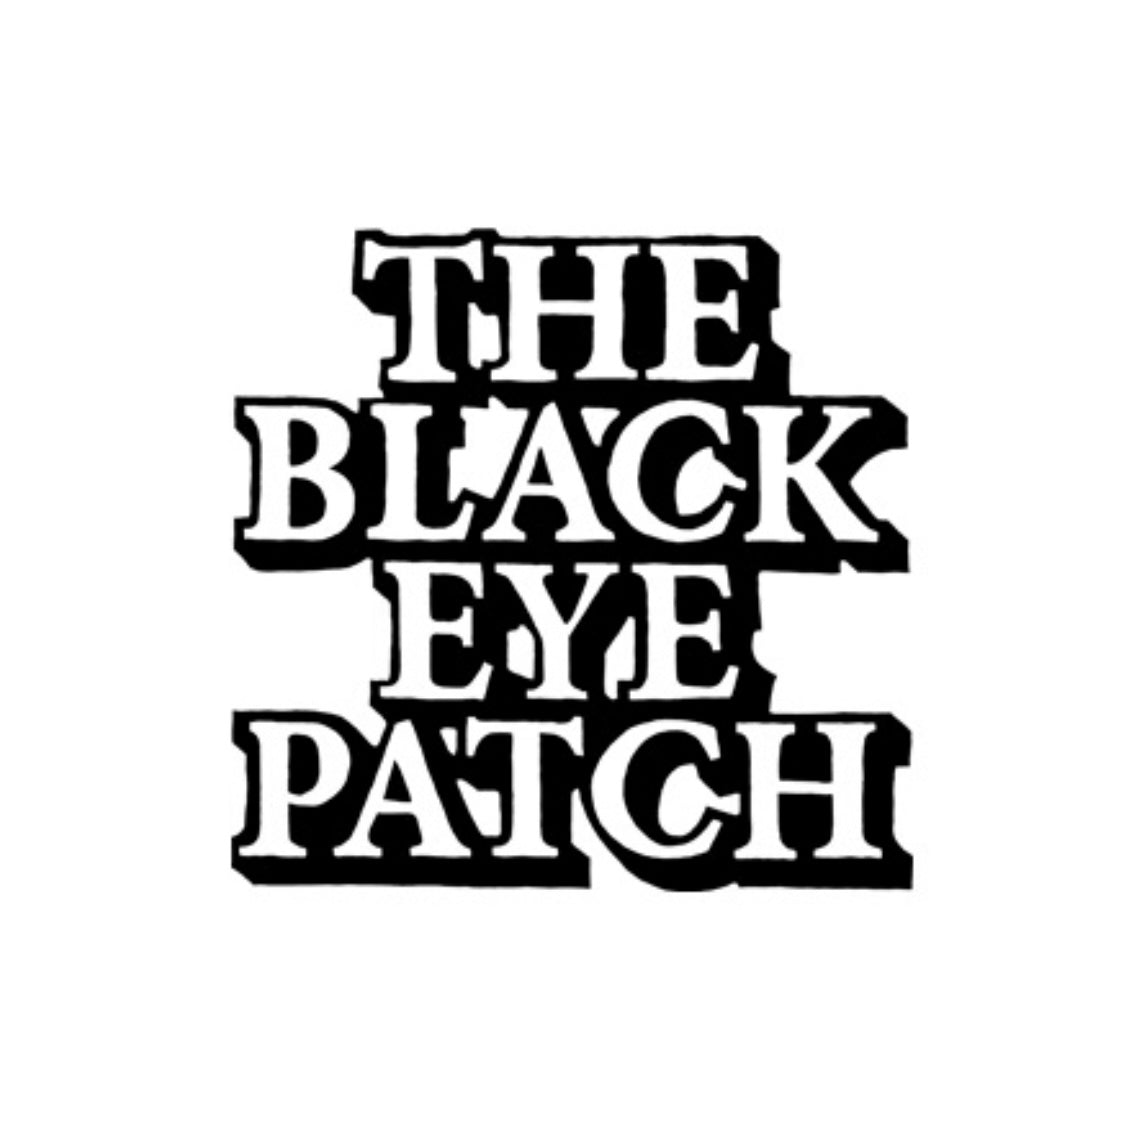 BLACK EYE PATCH (ブラックアイパッチ) 正規オンライン通販サイト